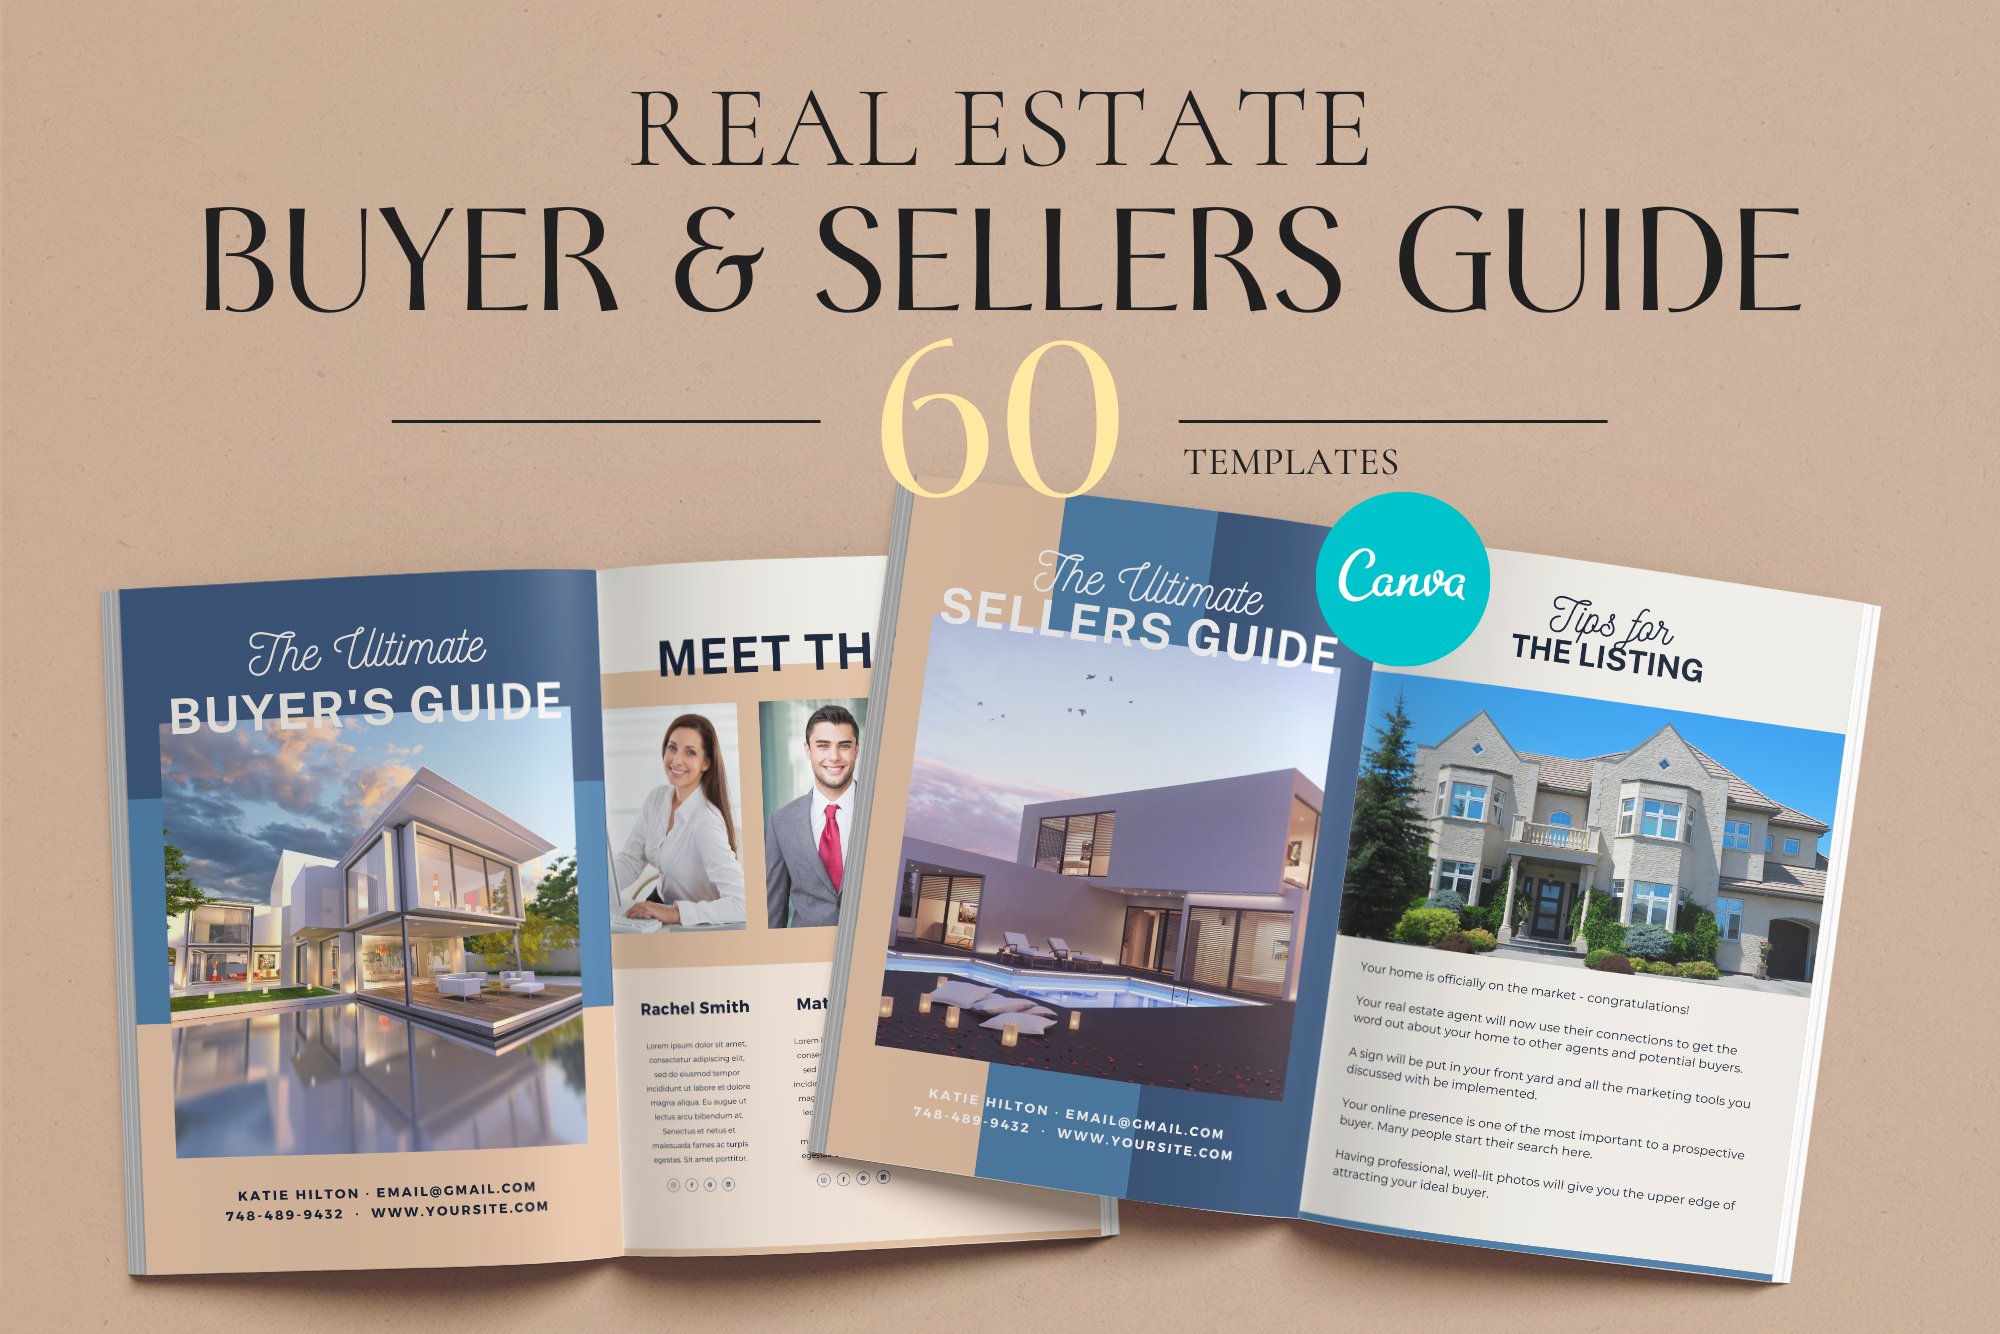 Buyer Seller Real Estate Canva Kit cover image.